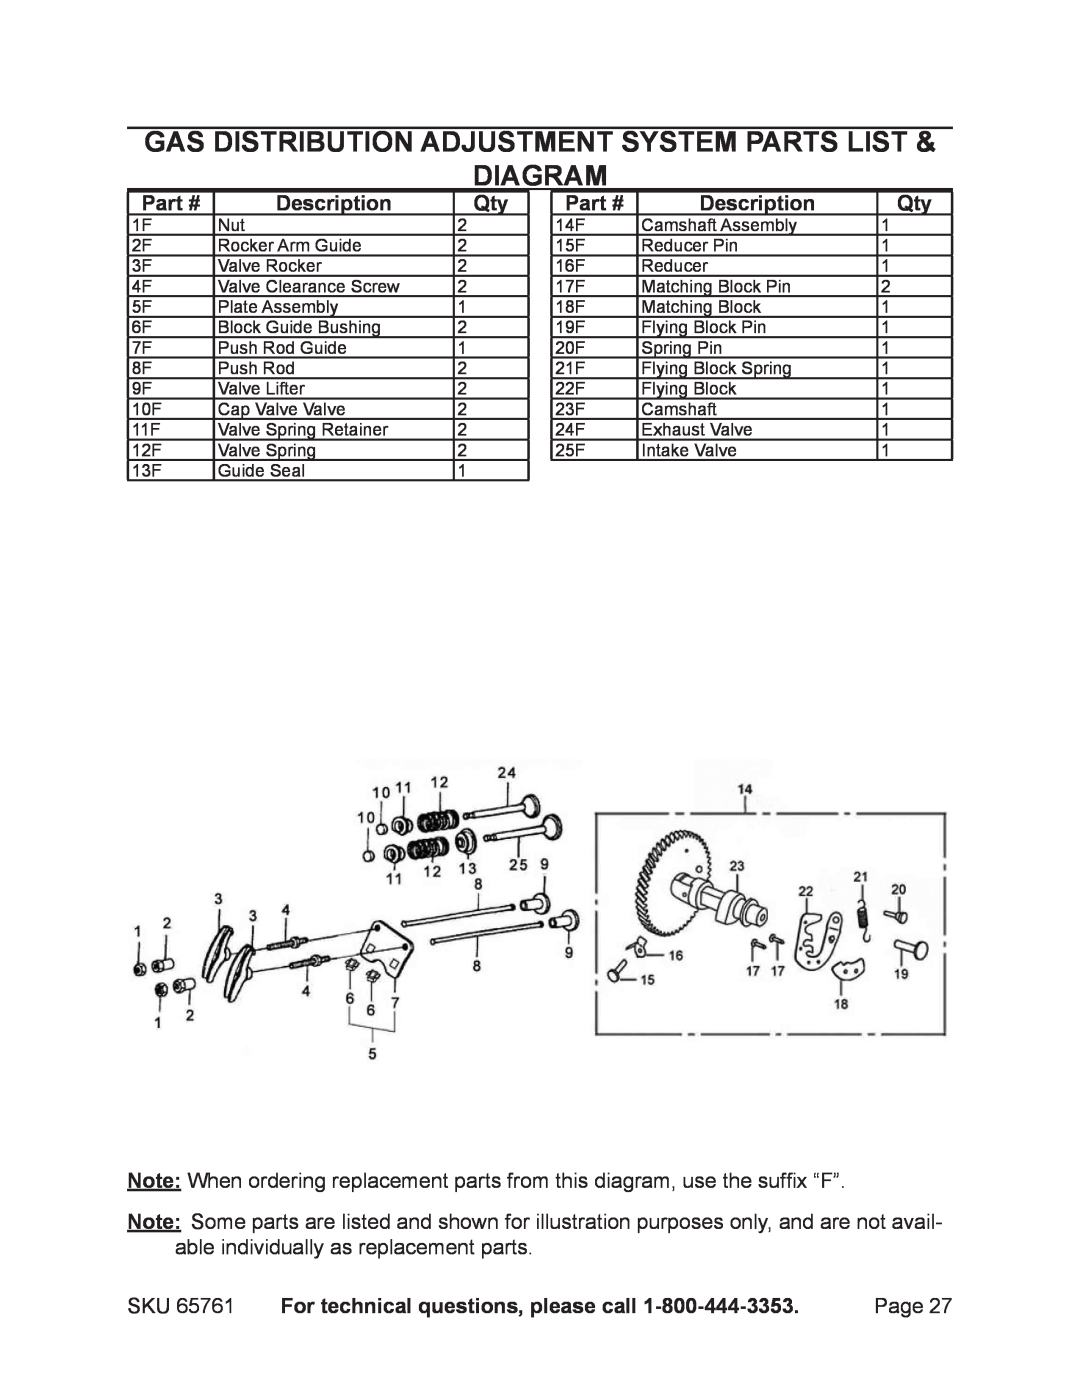 Harbor Freight Tools 65761 manual Gas distribution adjustment system parts list diagram, Description 